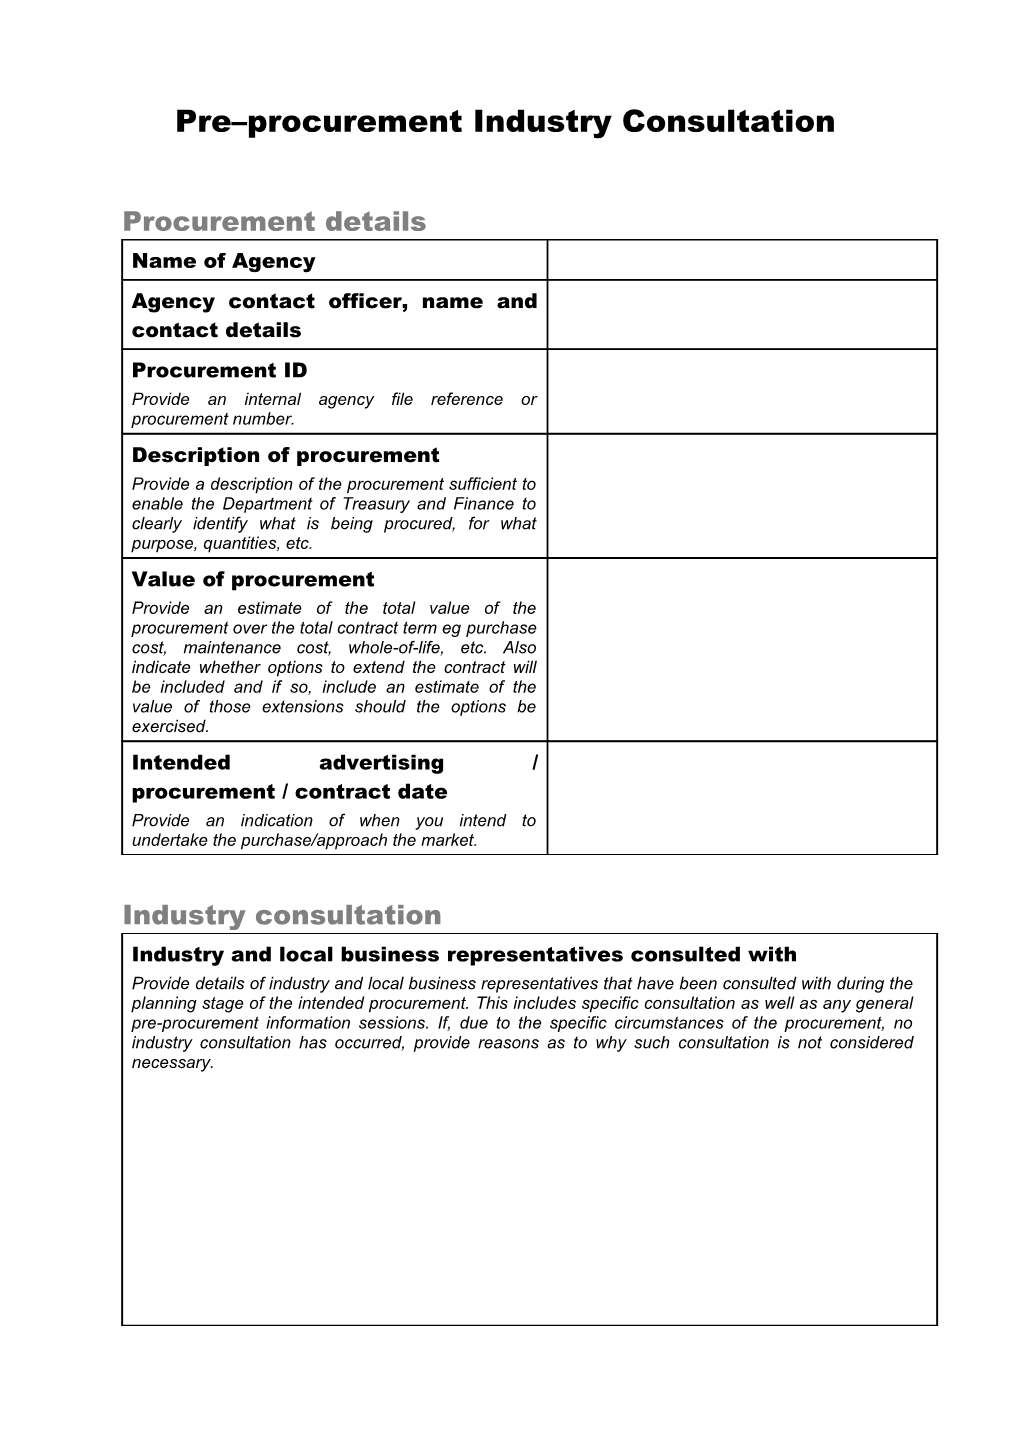 Pre-Procurement Industry Consultation Form